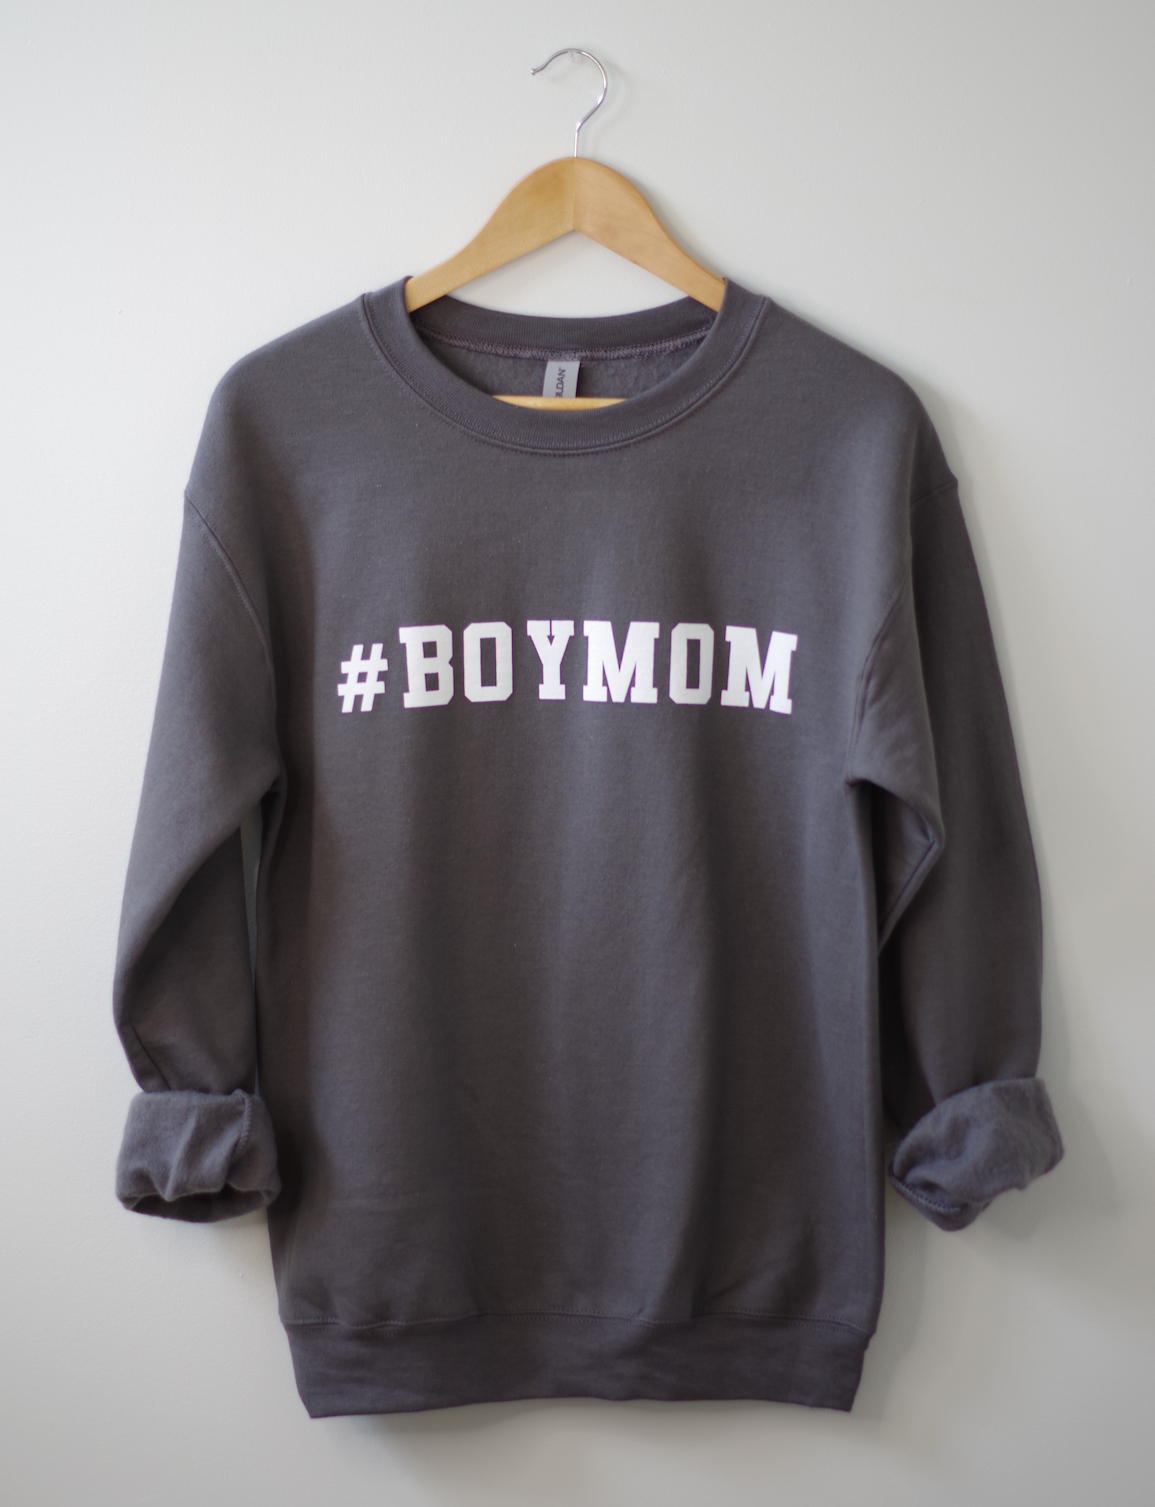 Boy Mom Crew Neck Sweater (Charcoal)